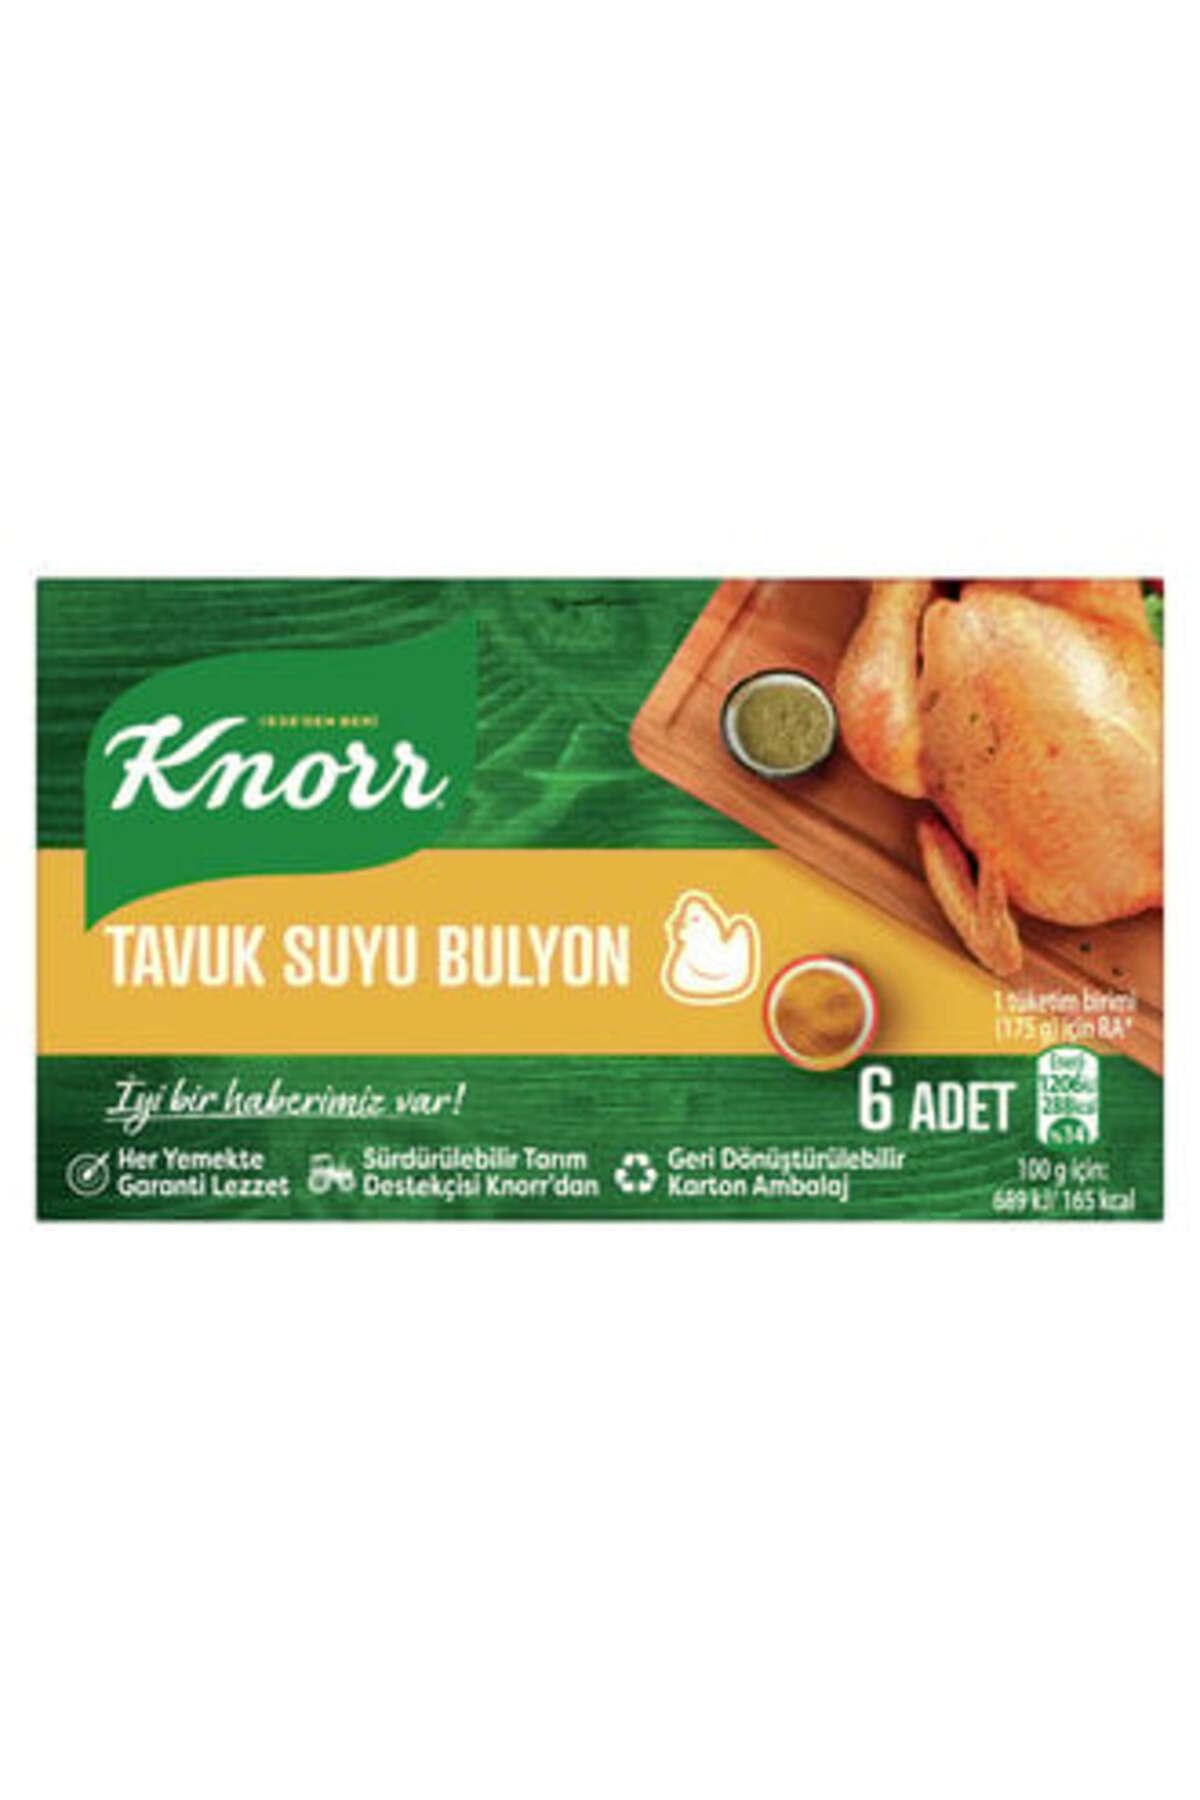 Knorr Tavuk Suyu Bulyon 6'lı 60 Gr ( 2 ADET )